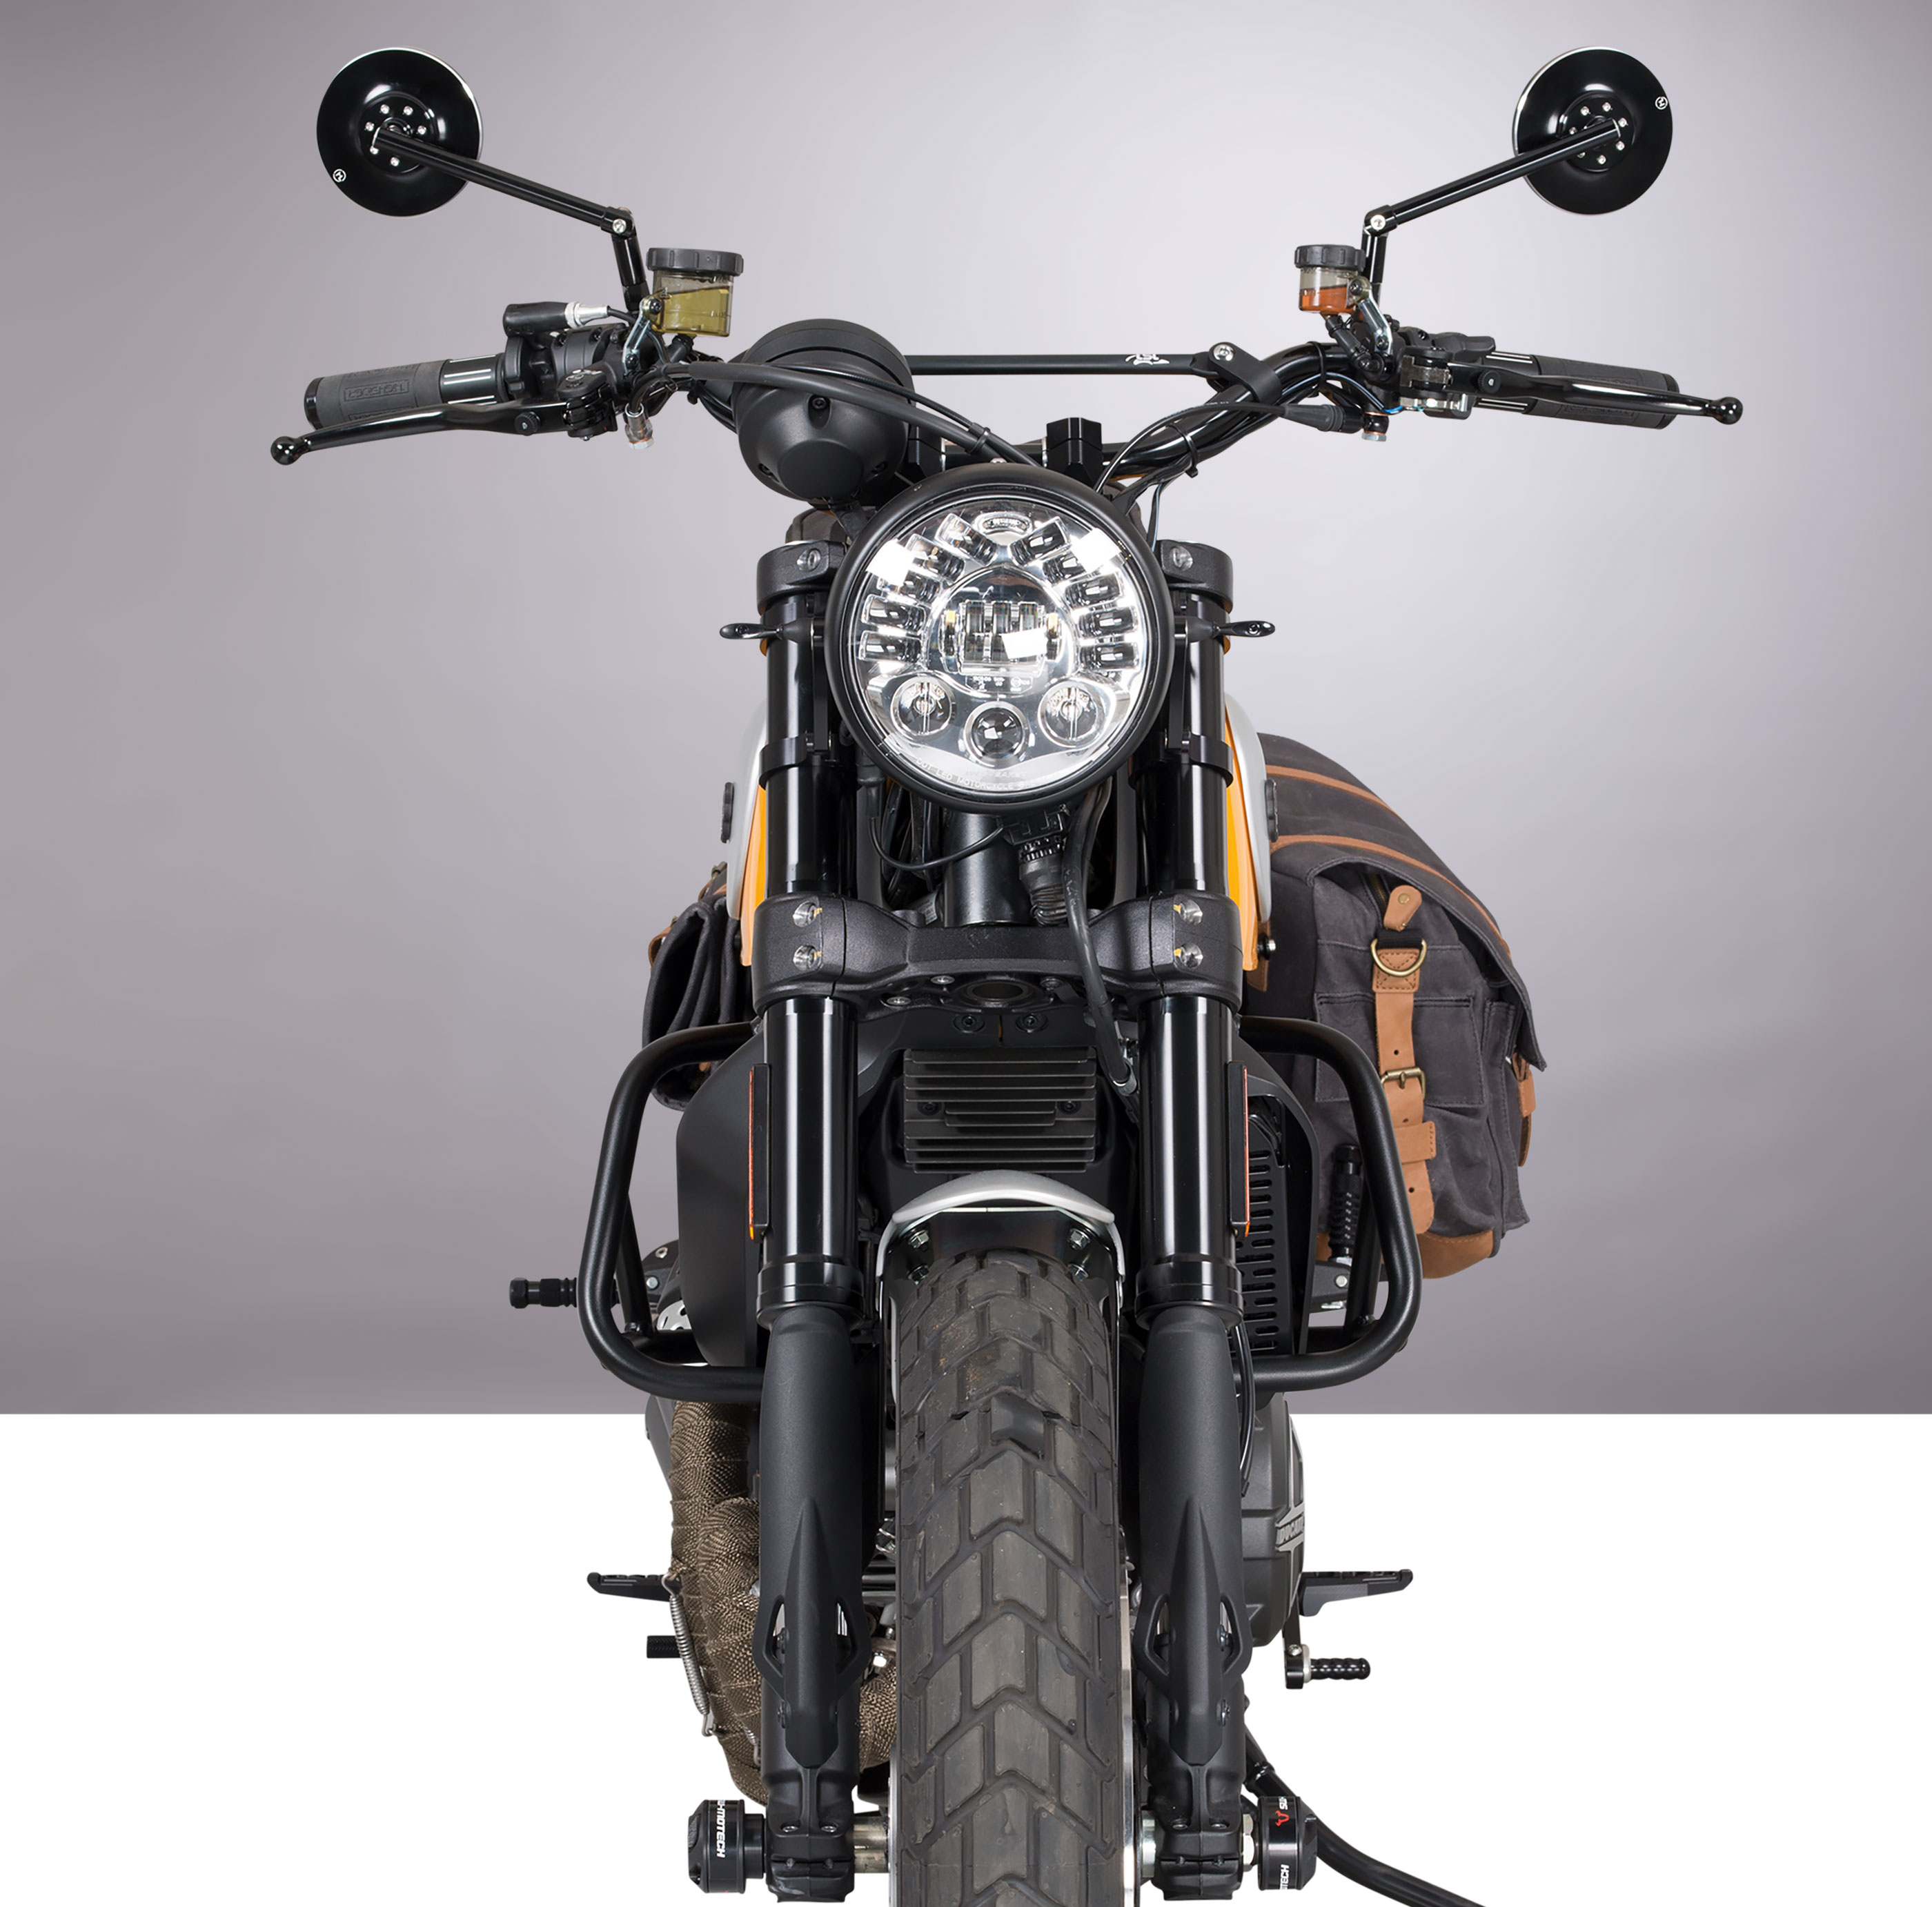 Moto. Ducati Scrambler 800, le renouveau de la moto de plage